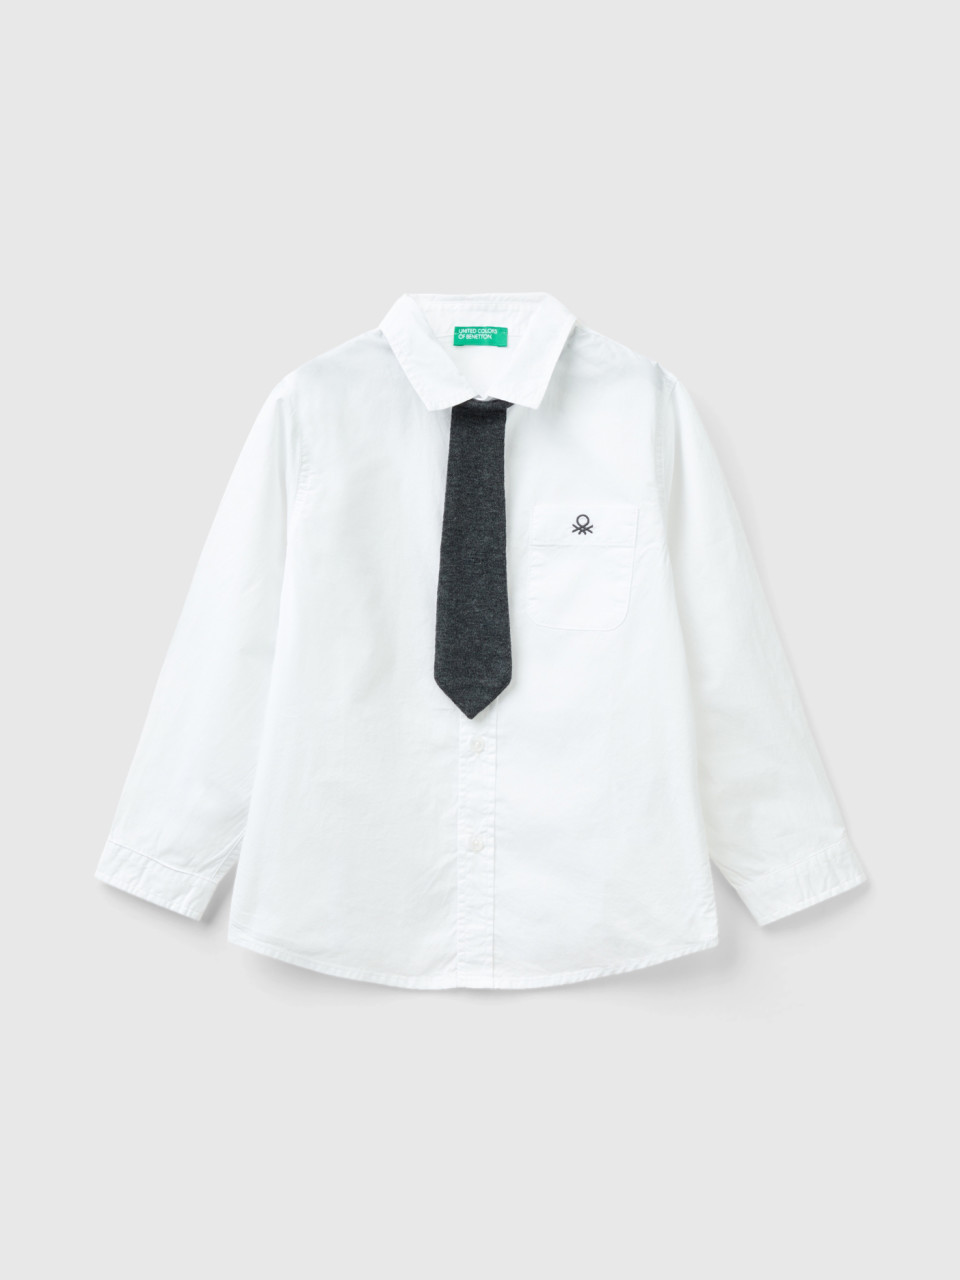 Benetton, Shirt With Detachable Tie, White, Kids